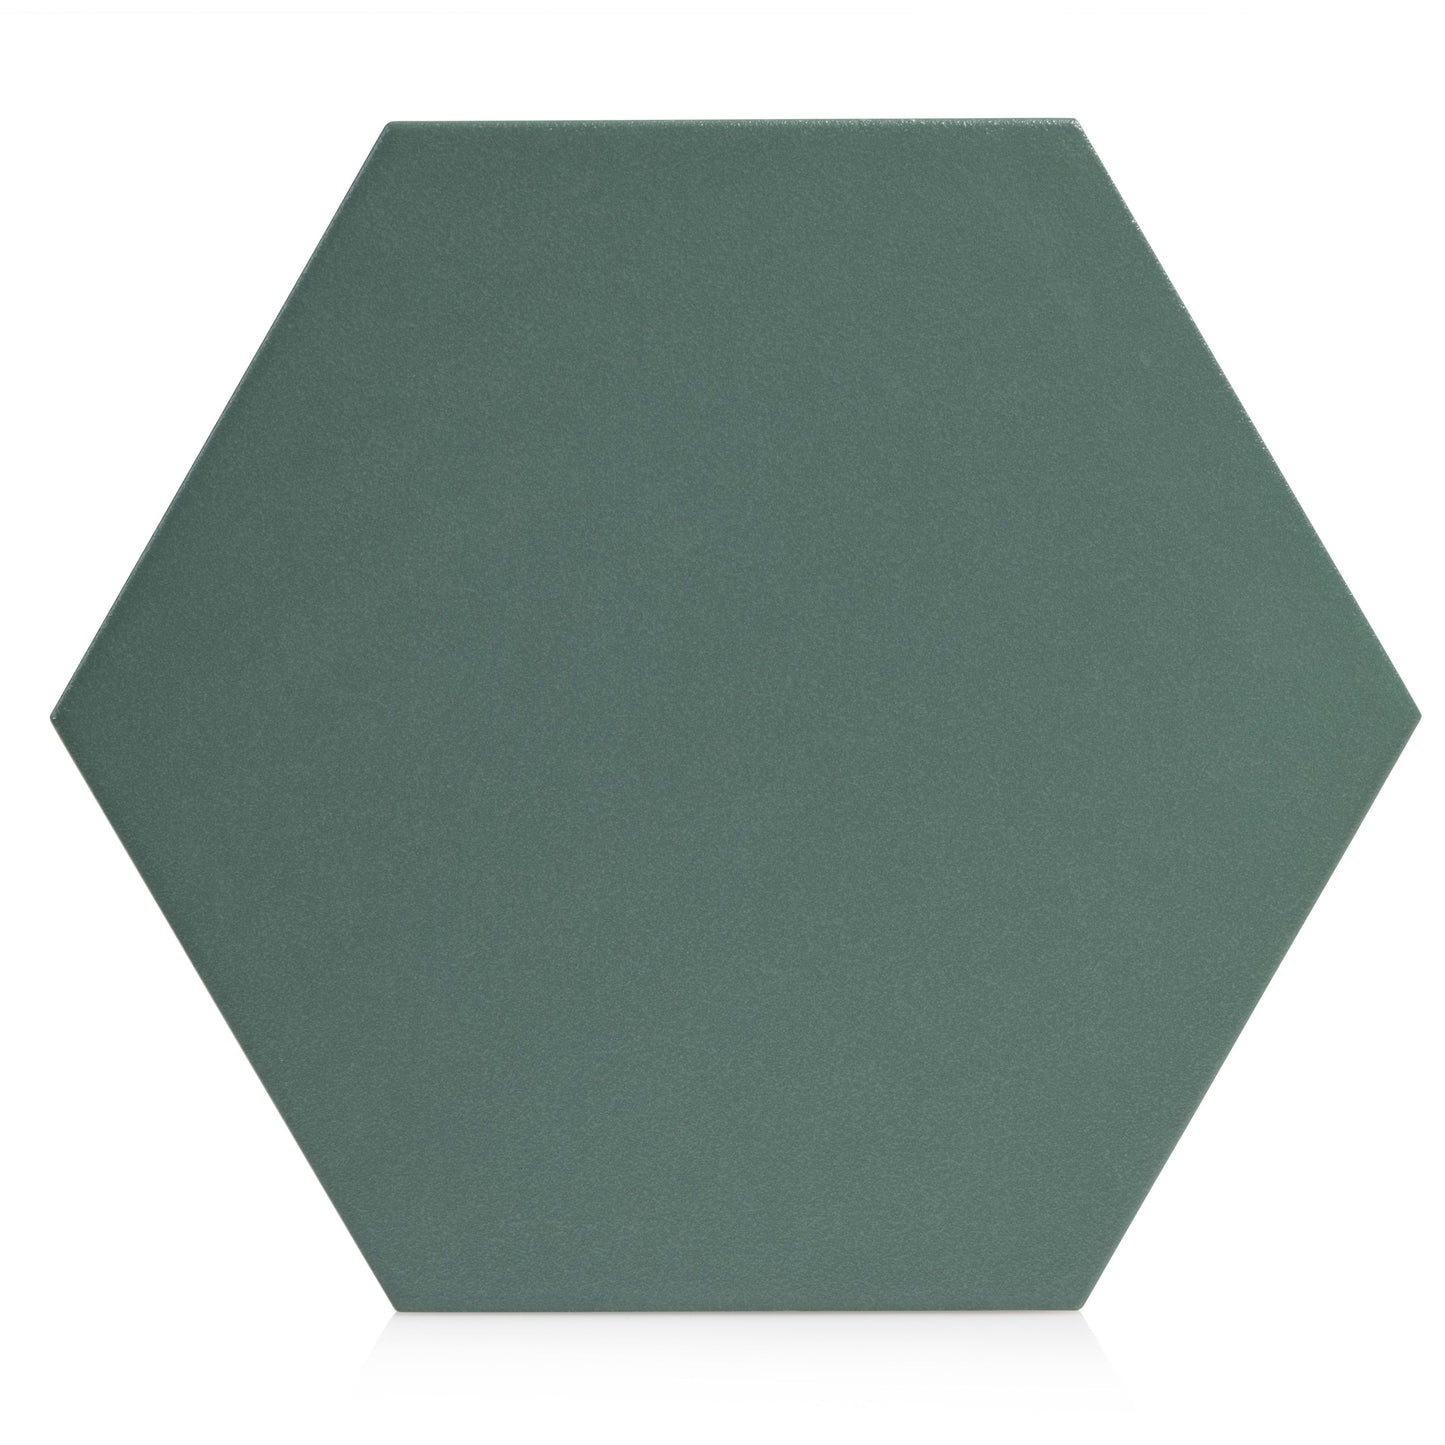 7.8x9 Tribeca Hexagon Green porcelain tile - Industry Tile